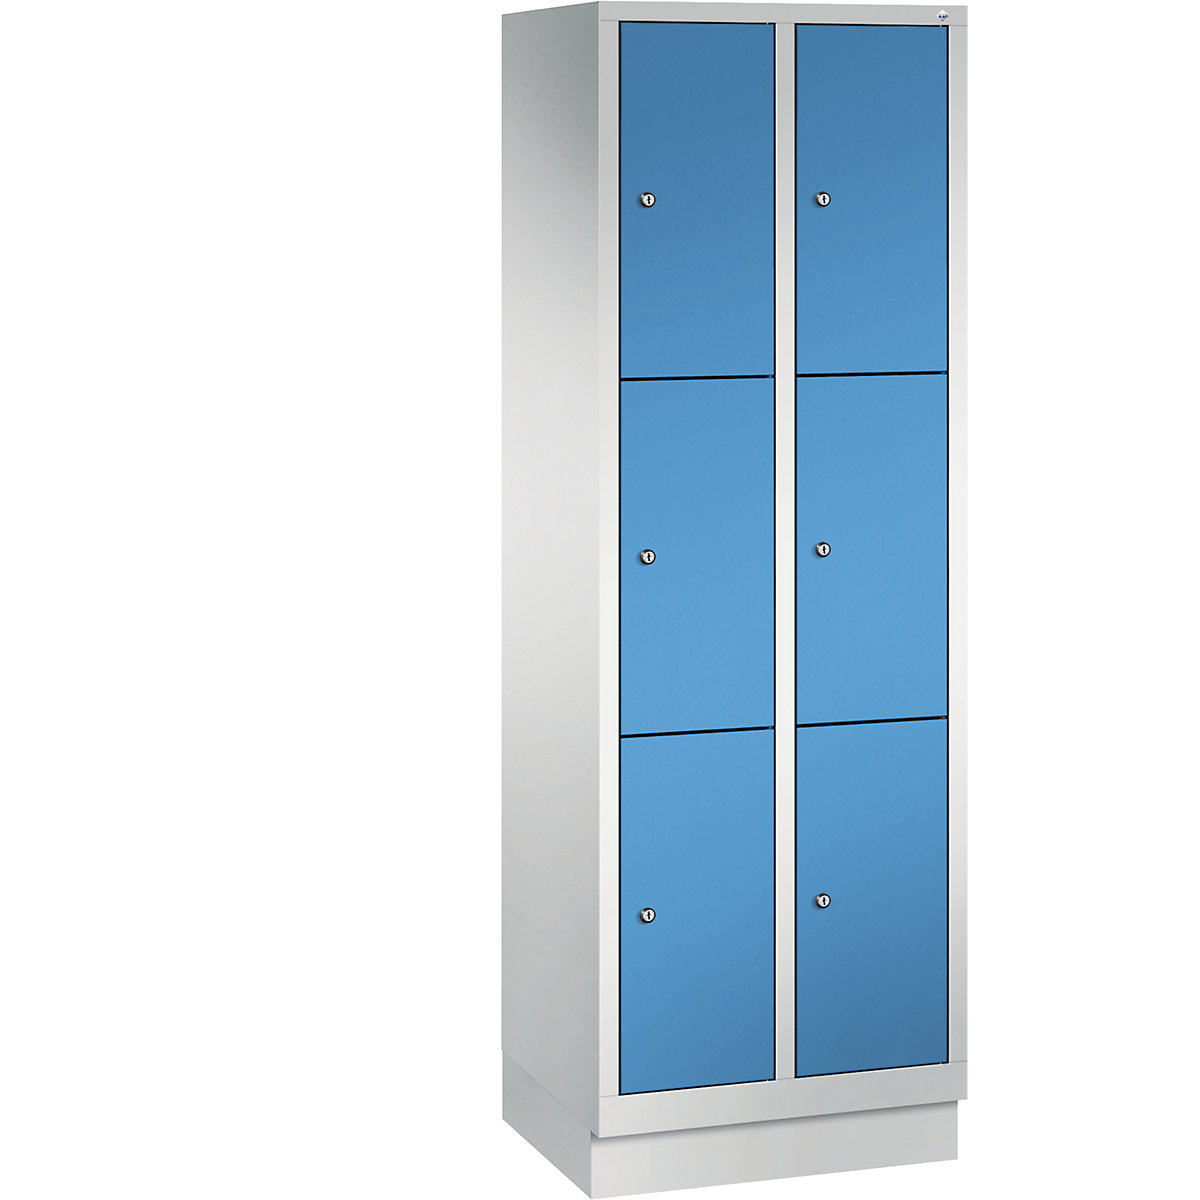 CLASSIC locker unit with plinth – C+P, 2 compartments, 3 shelf compartments each, compartment width 300 mm, light grey / light blue-14